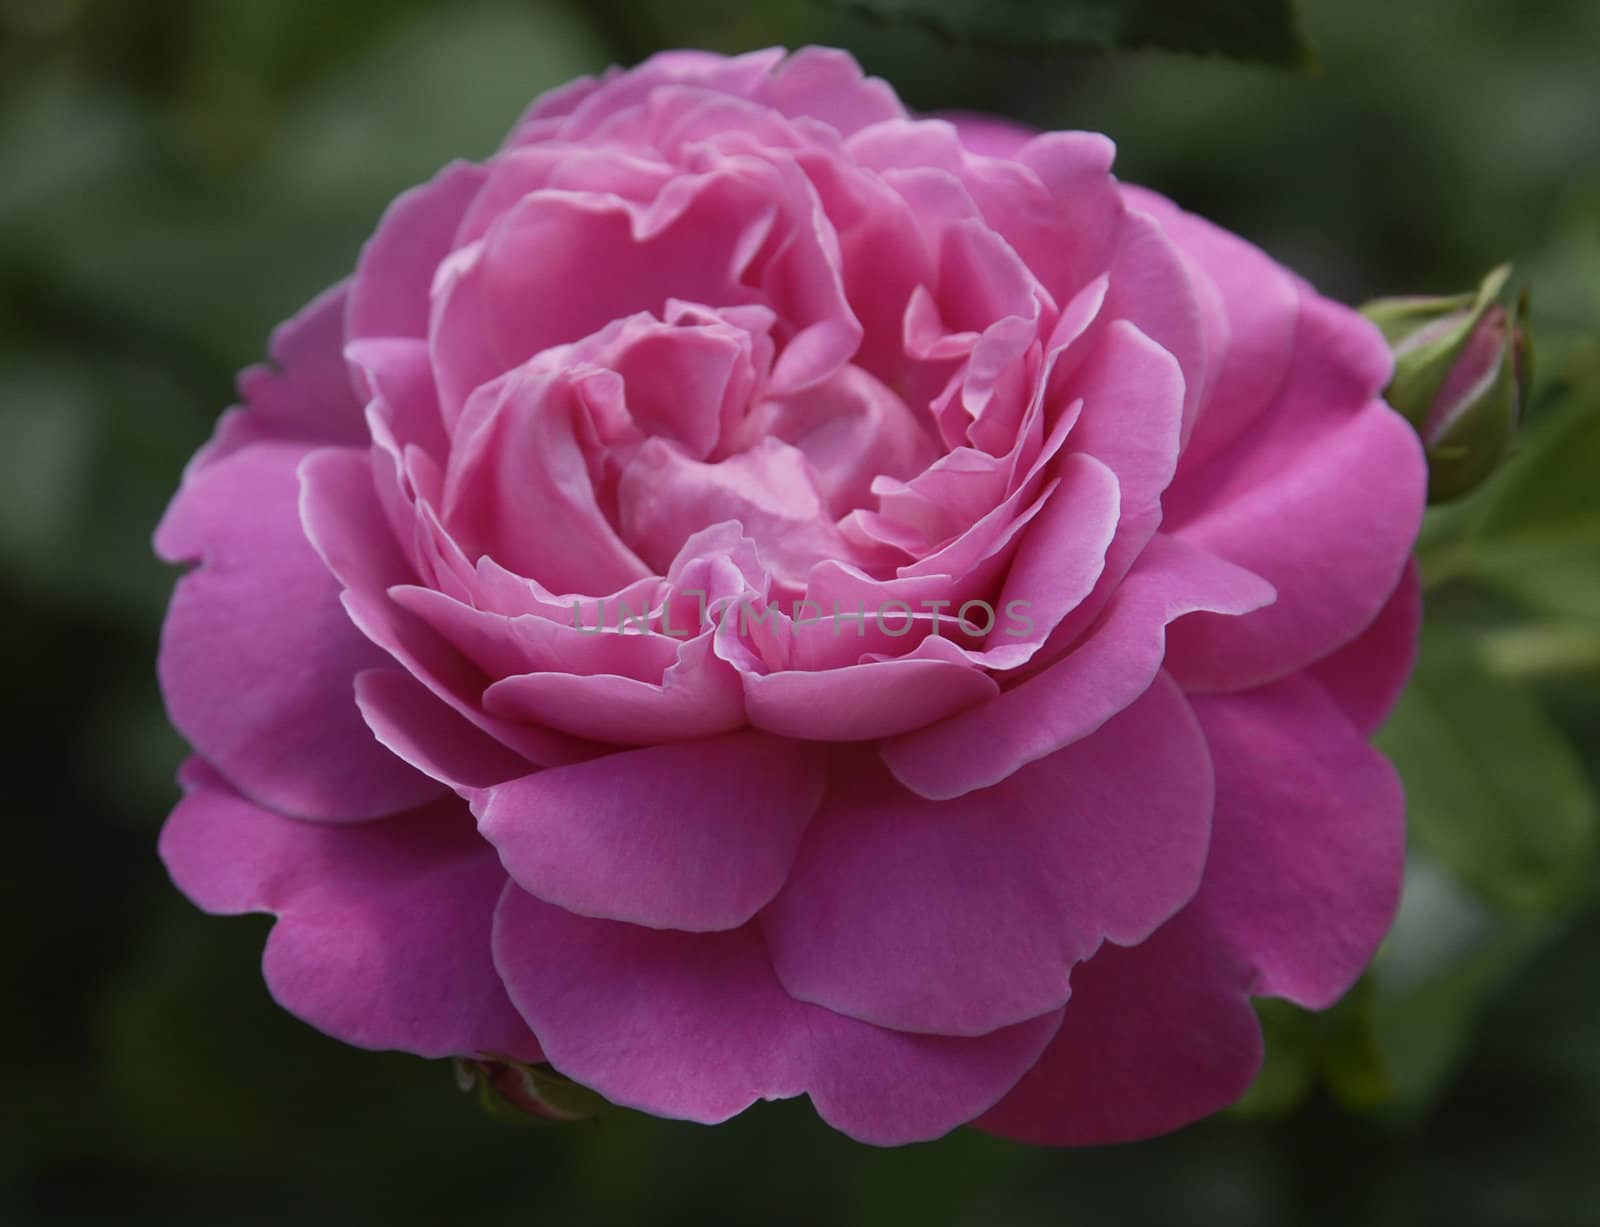 'Mary Rose' rose flower by liseykina